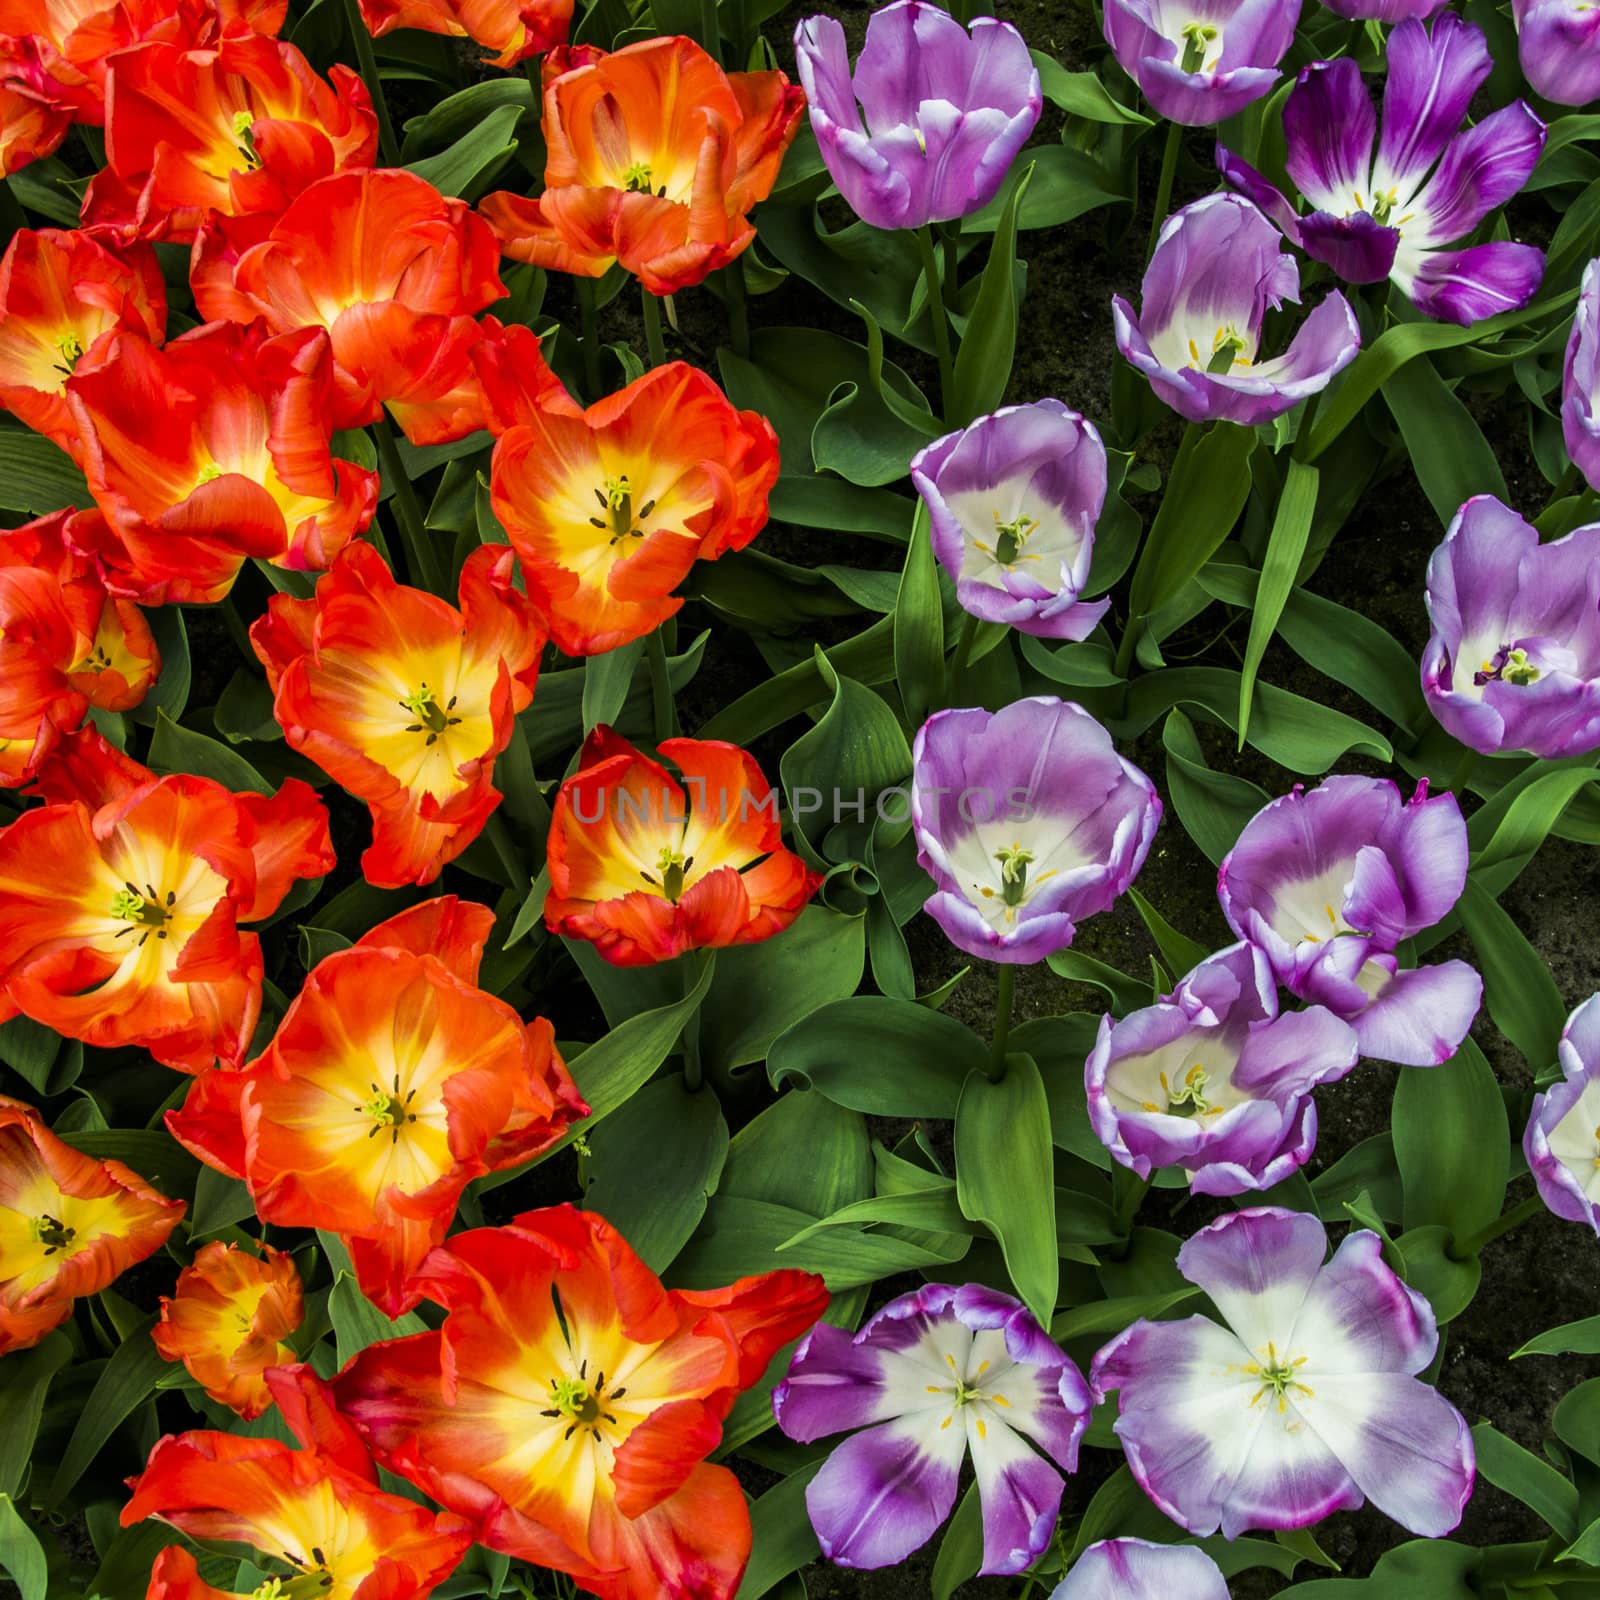 Tulips in the Keukenhof garden Netherlands